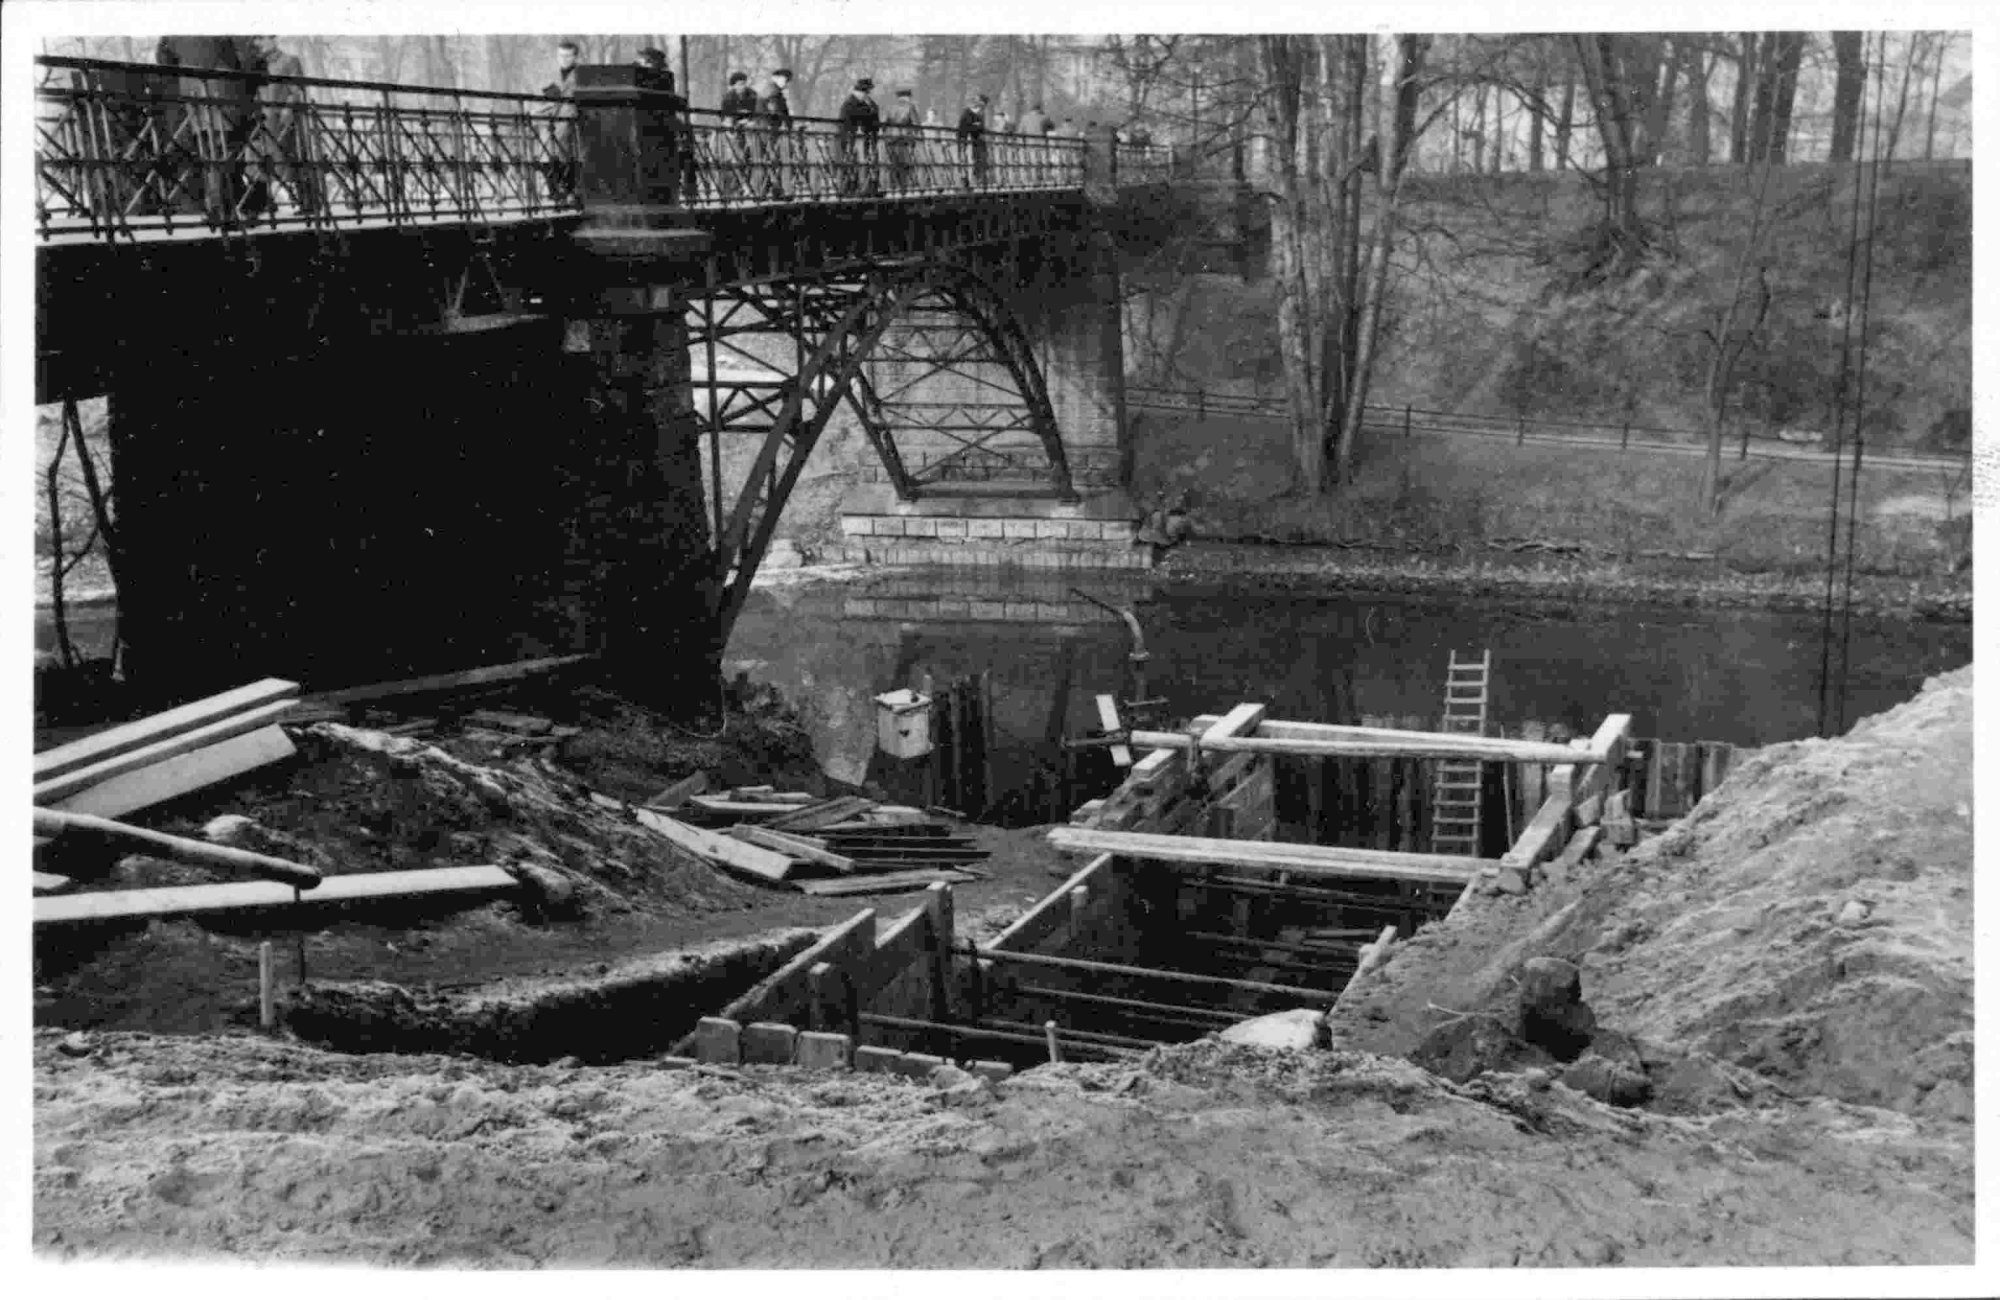 Ottmerbrücke, Ostansicht mit Fundament der Brücke Kurt-Schumacher-Straße, 1958 (Wird bei Klick vergrößert)